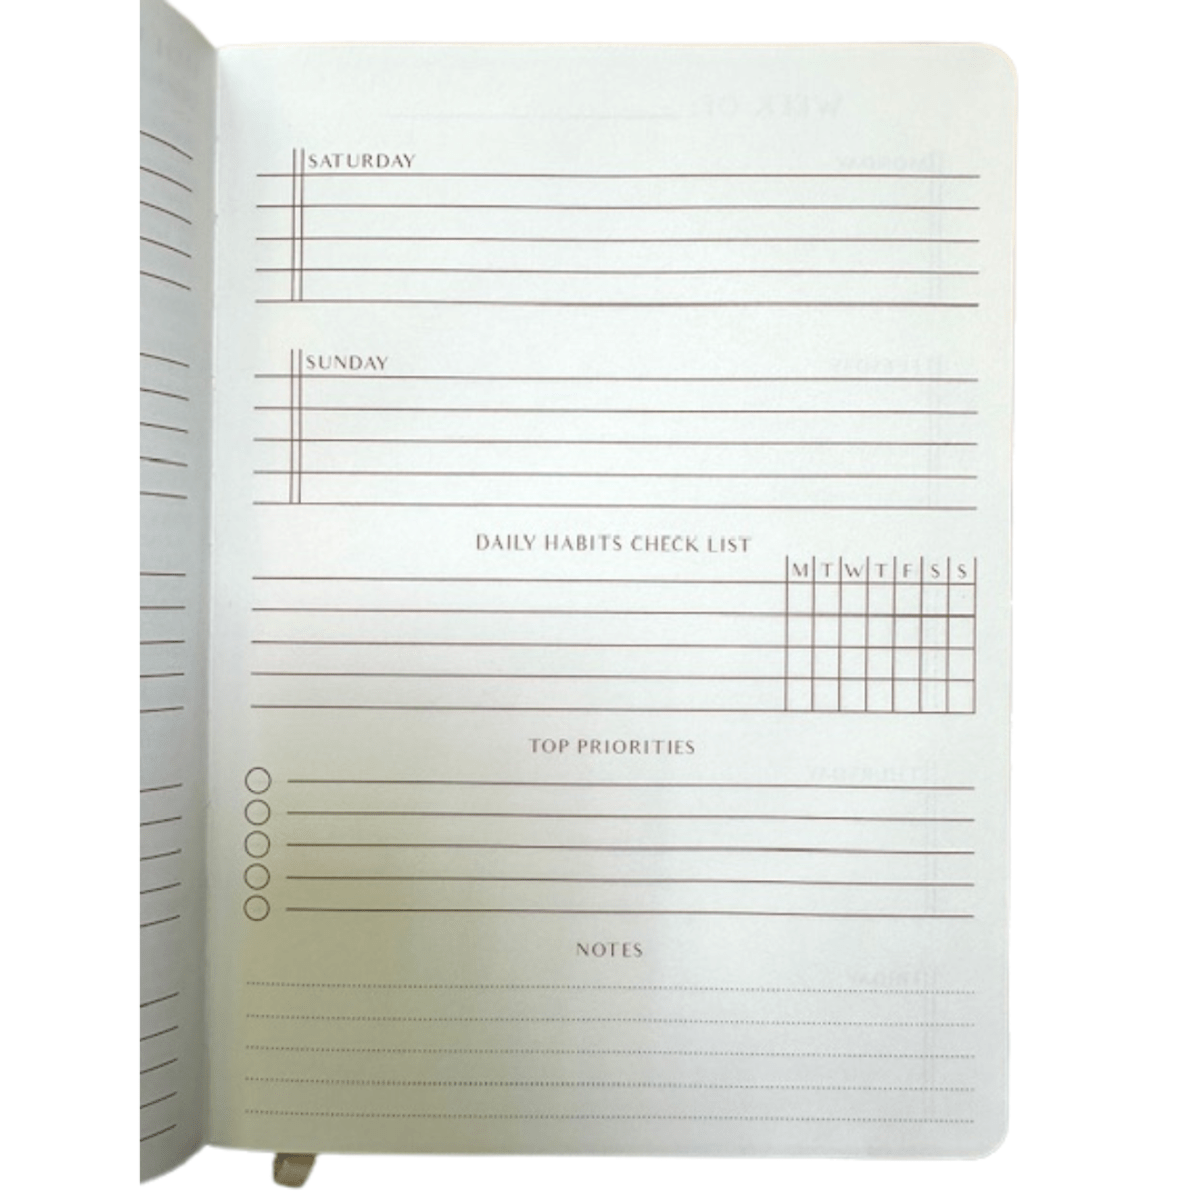 Gentlemen's Hardware Stationery Travel Design Soft Cover Notebook